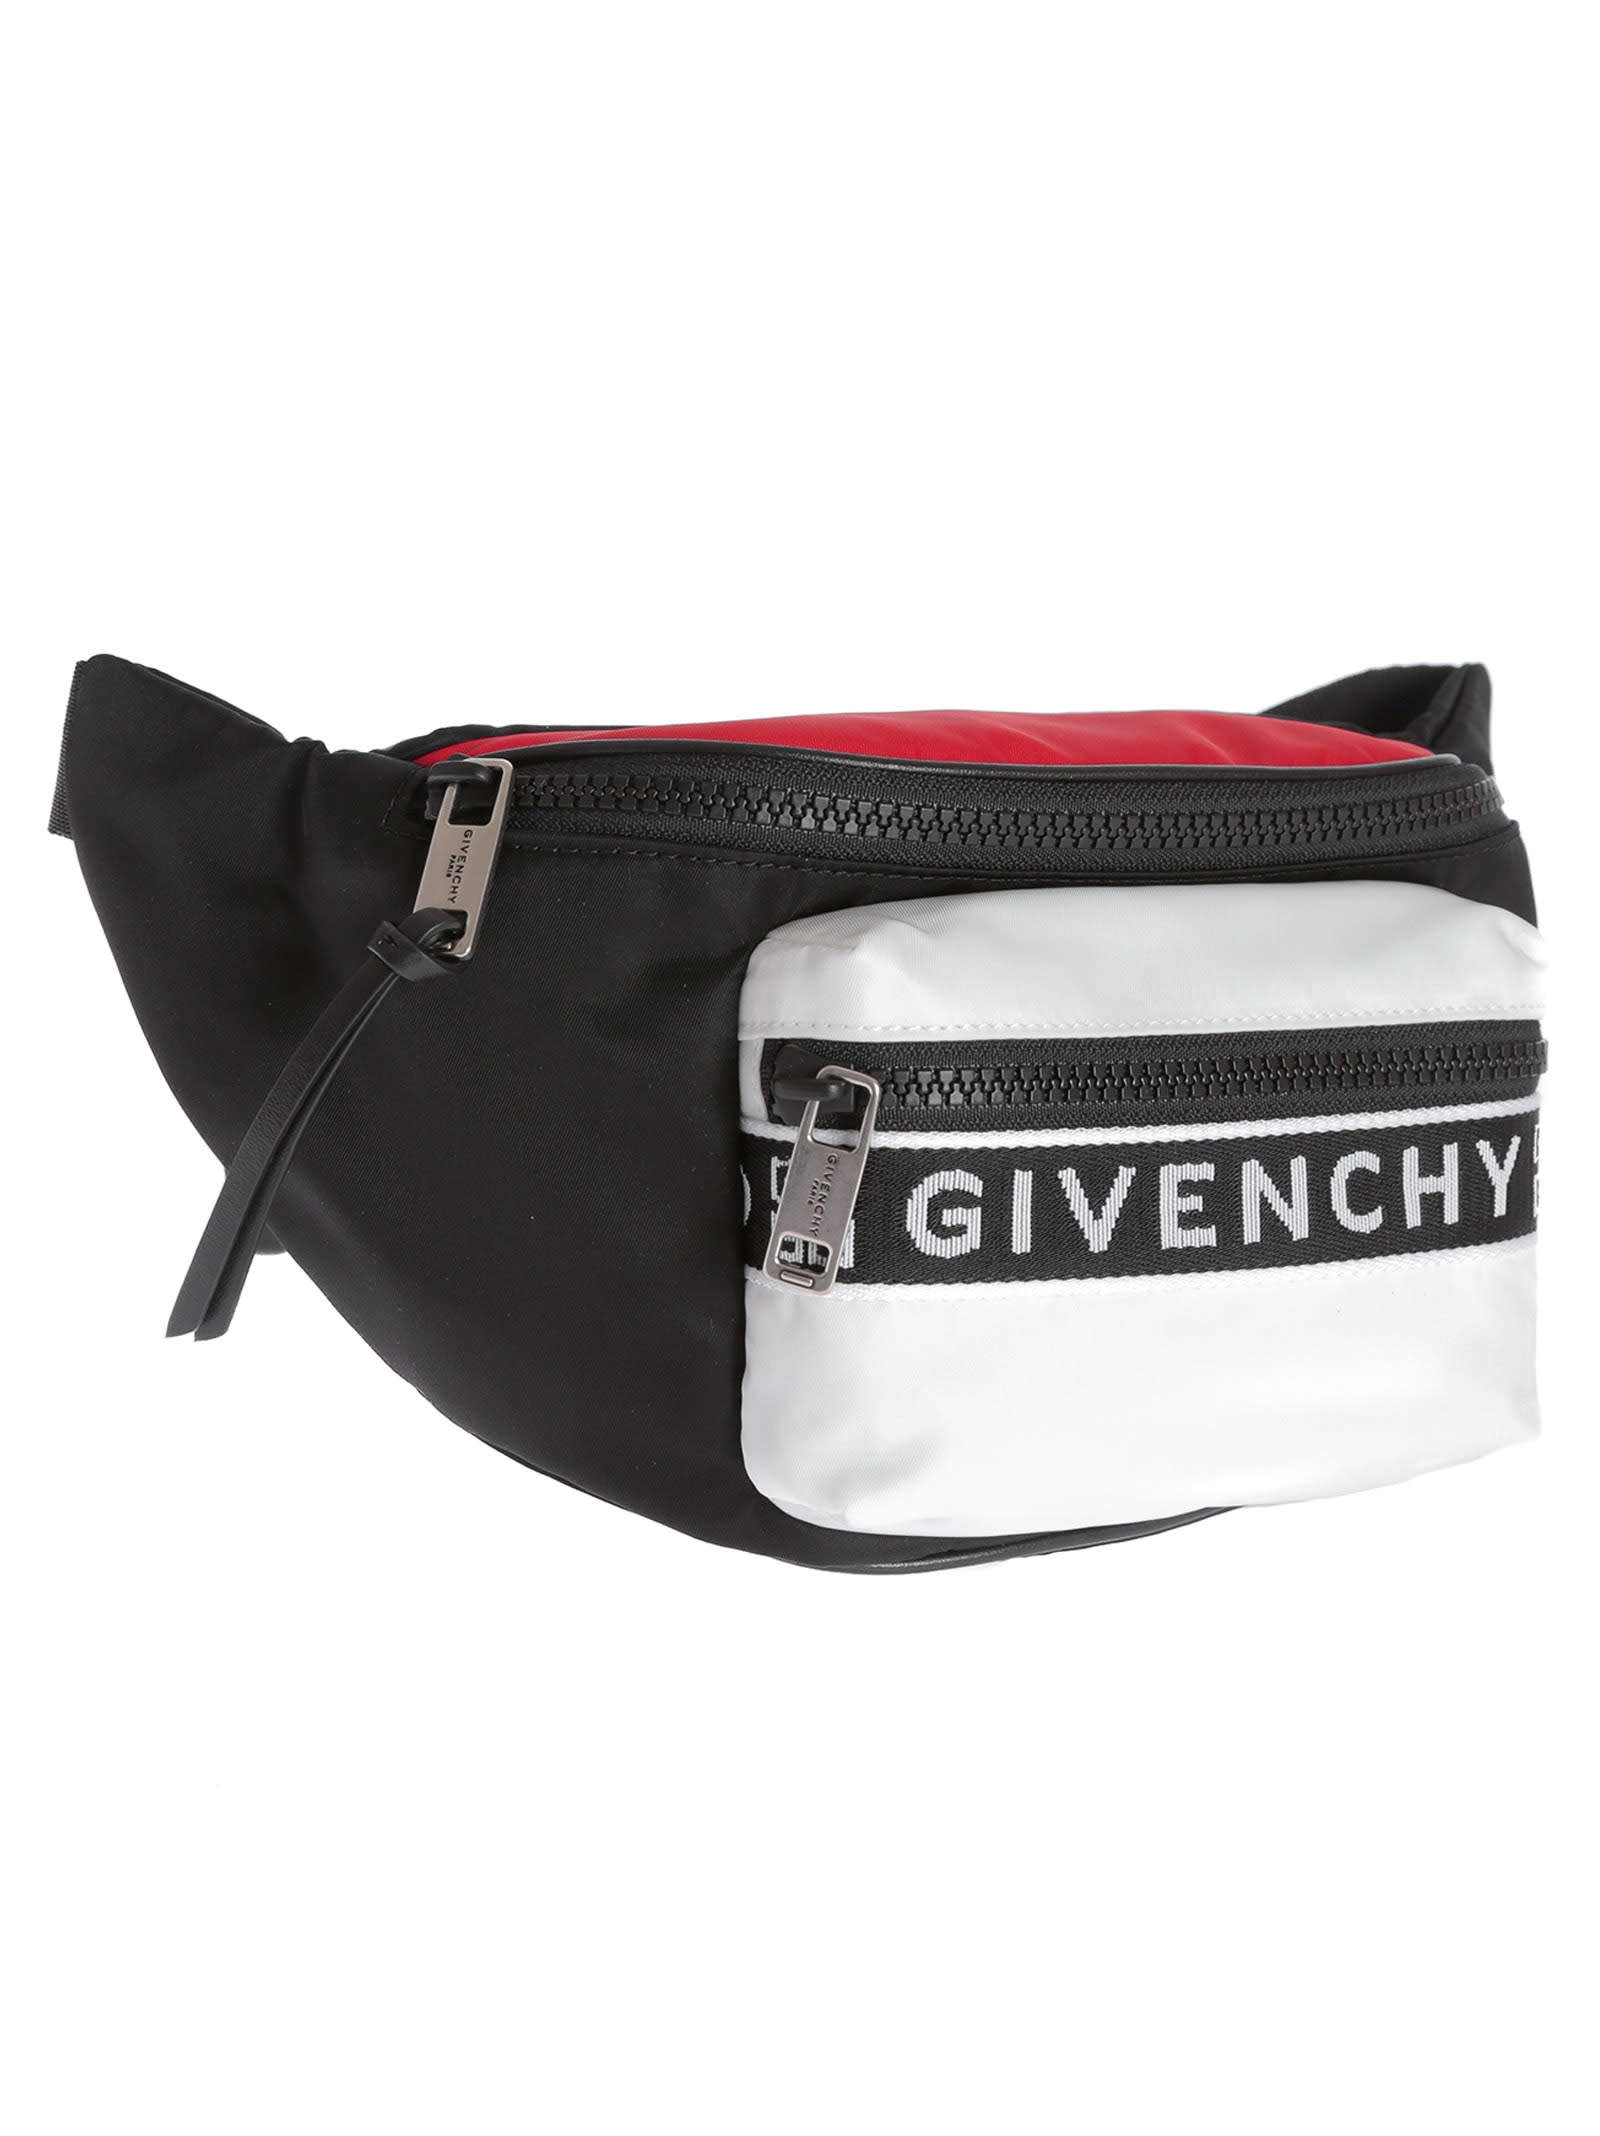 Givenchy Givenchy Light 3 Sac Banane Belt Bag - 11001550 | italist